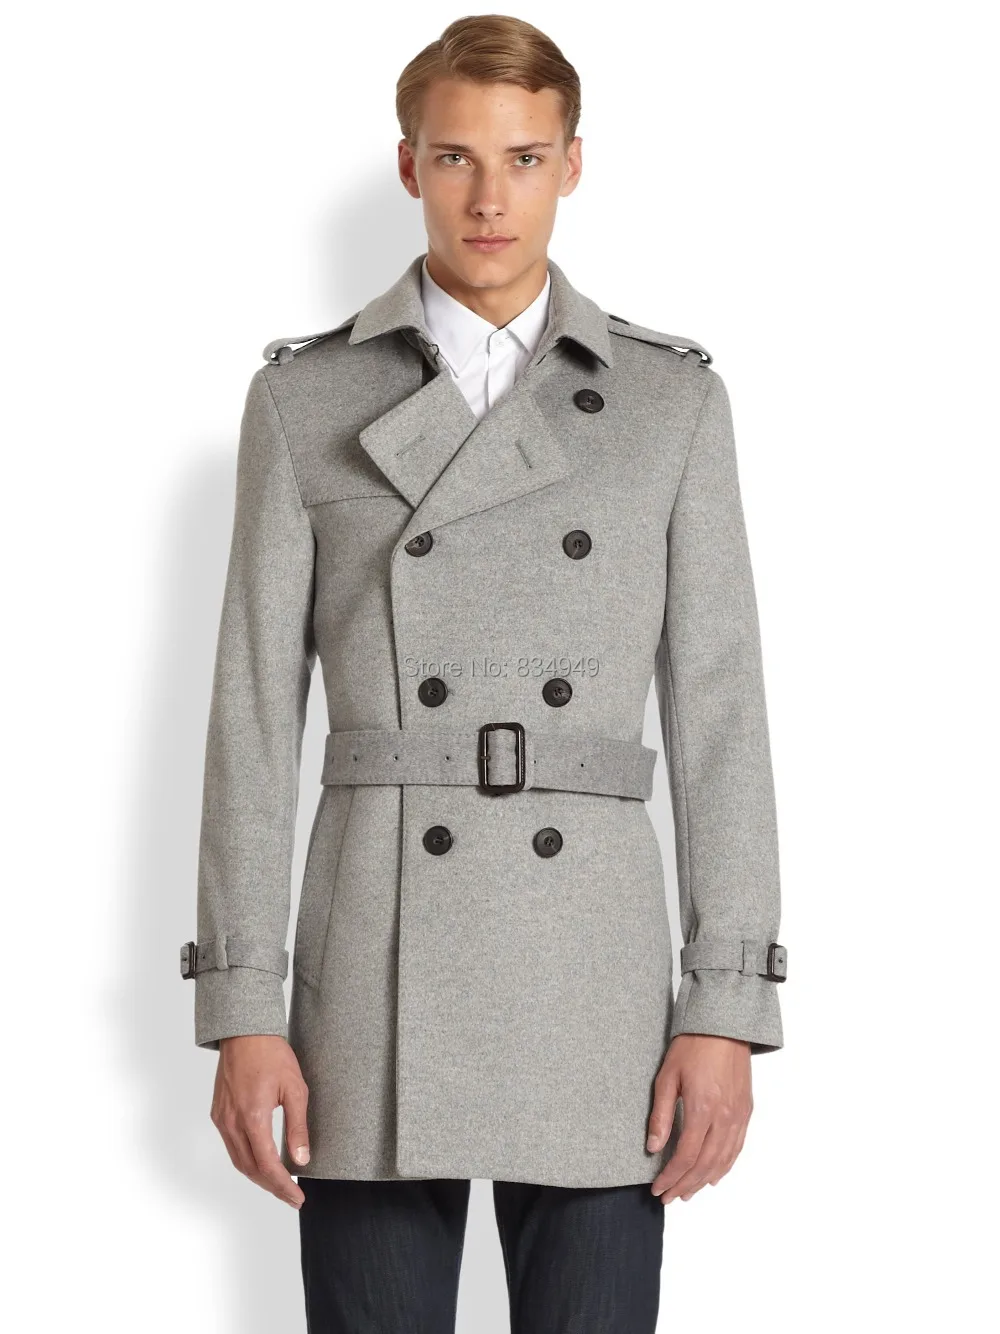 Aliexpress.com : Buy Custom Made Trench Coat Men, Winter